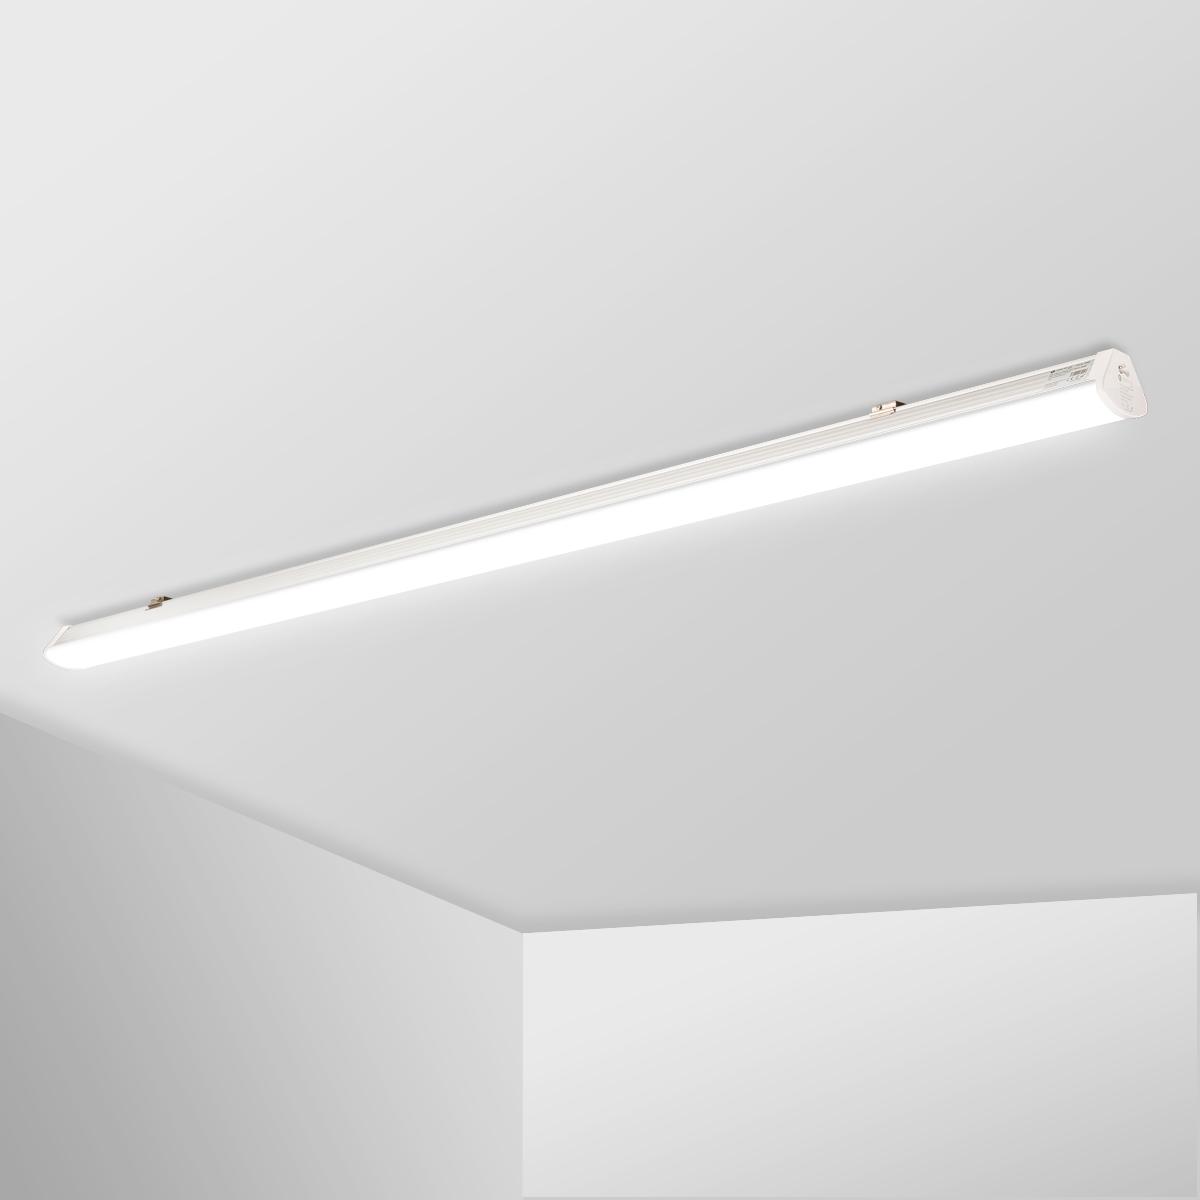 LED Linear Leuchte 150cm 60W 7800lm IP42 - Lichtfarbe: Kaltweiß 6000K